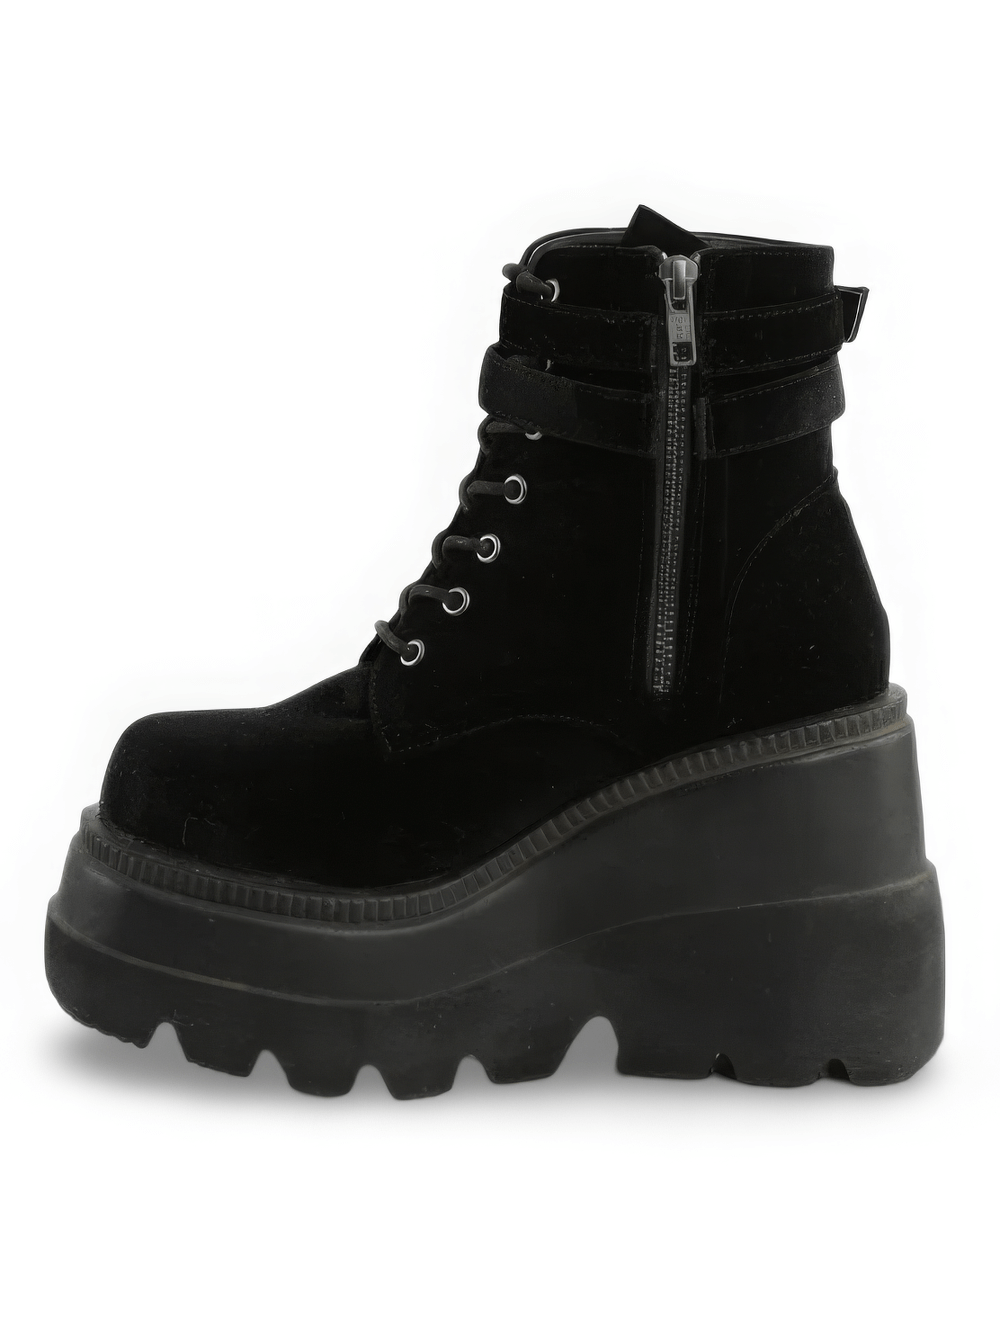 DEMONIA Black Velvet Platform Boots with Straps